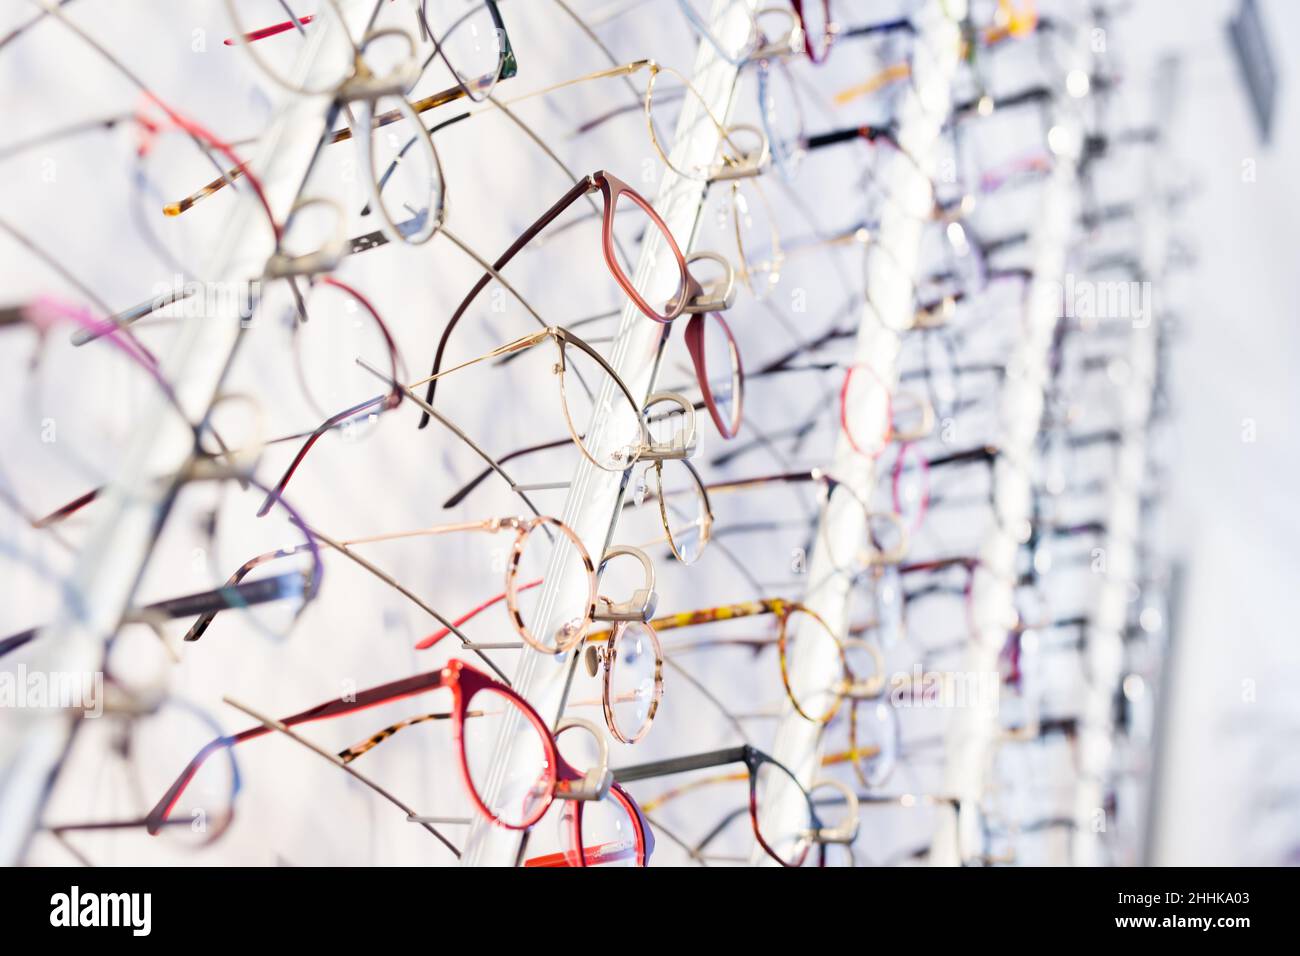 Glasses showcase in modern optic shop Stock Photo